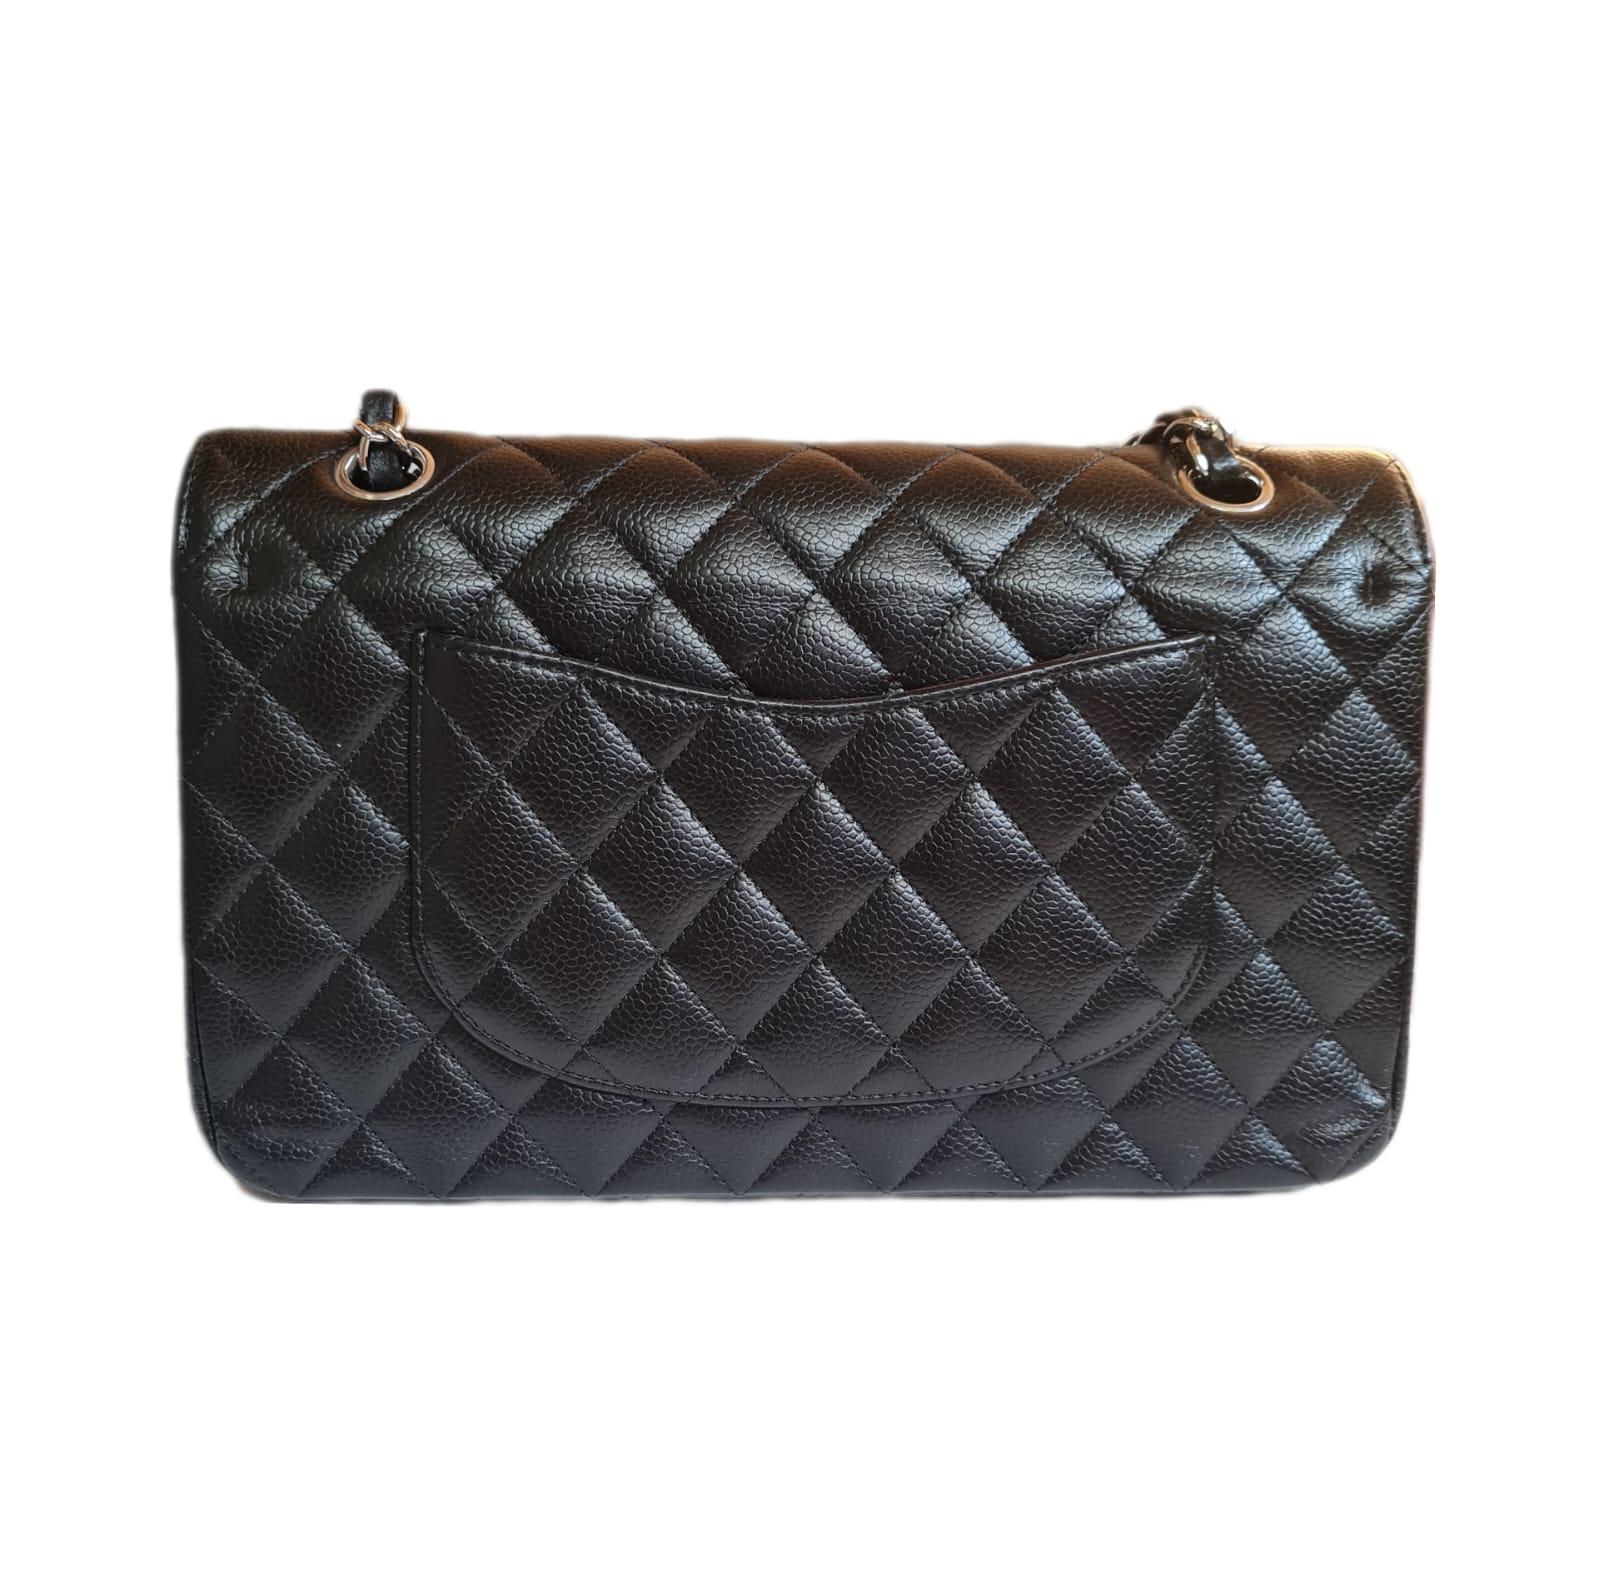 2021 Chanel Black Caviar Classic Double Flap Bag SHW 13